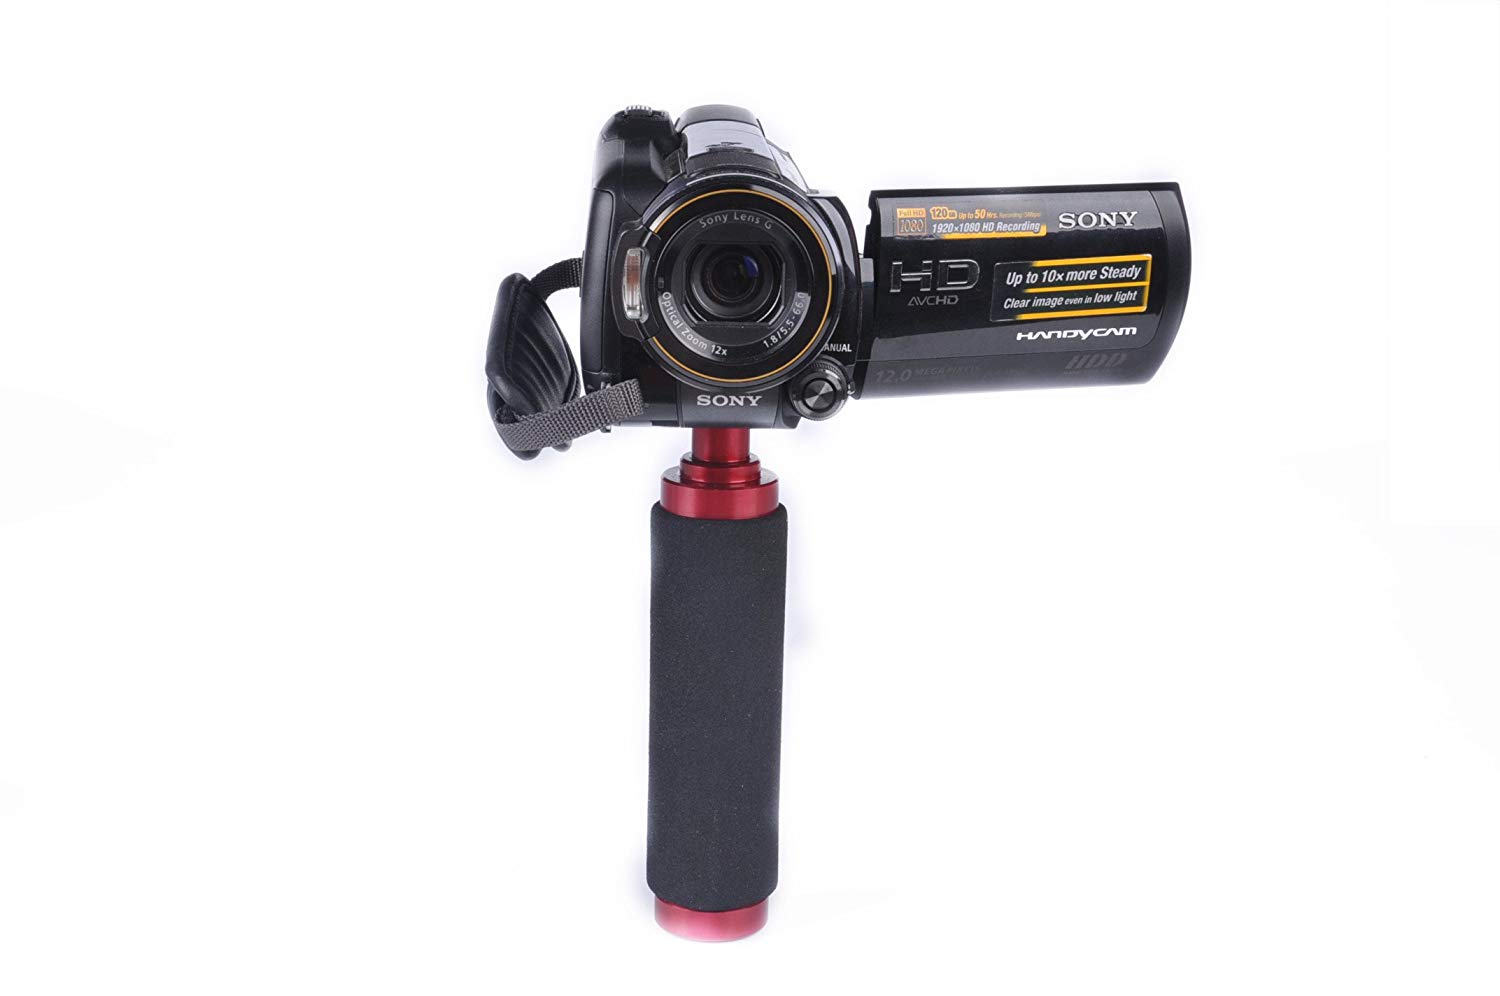 Sevenoak SK-HG1 Handgrip for DSLR, Mirrorless Cameras and Action Cameras